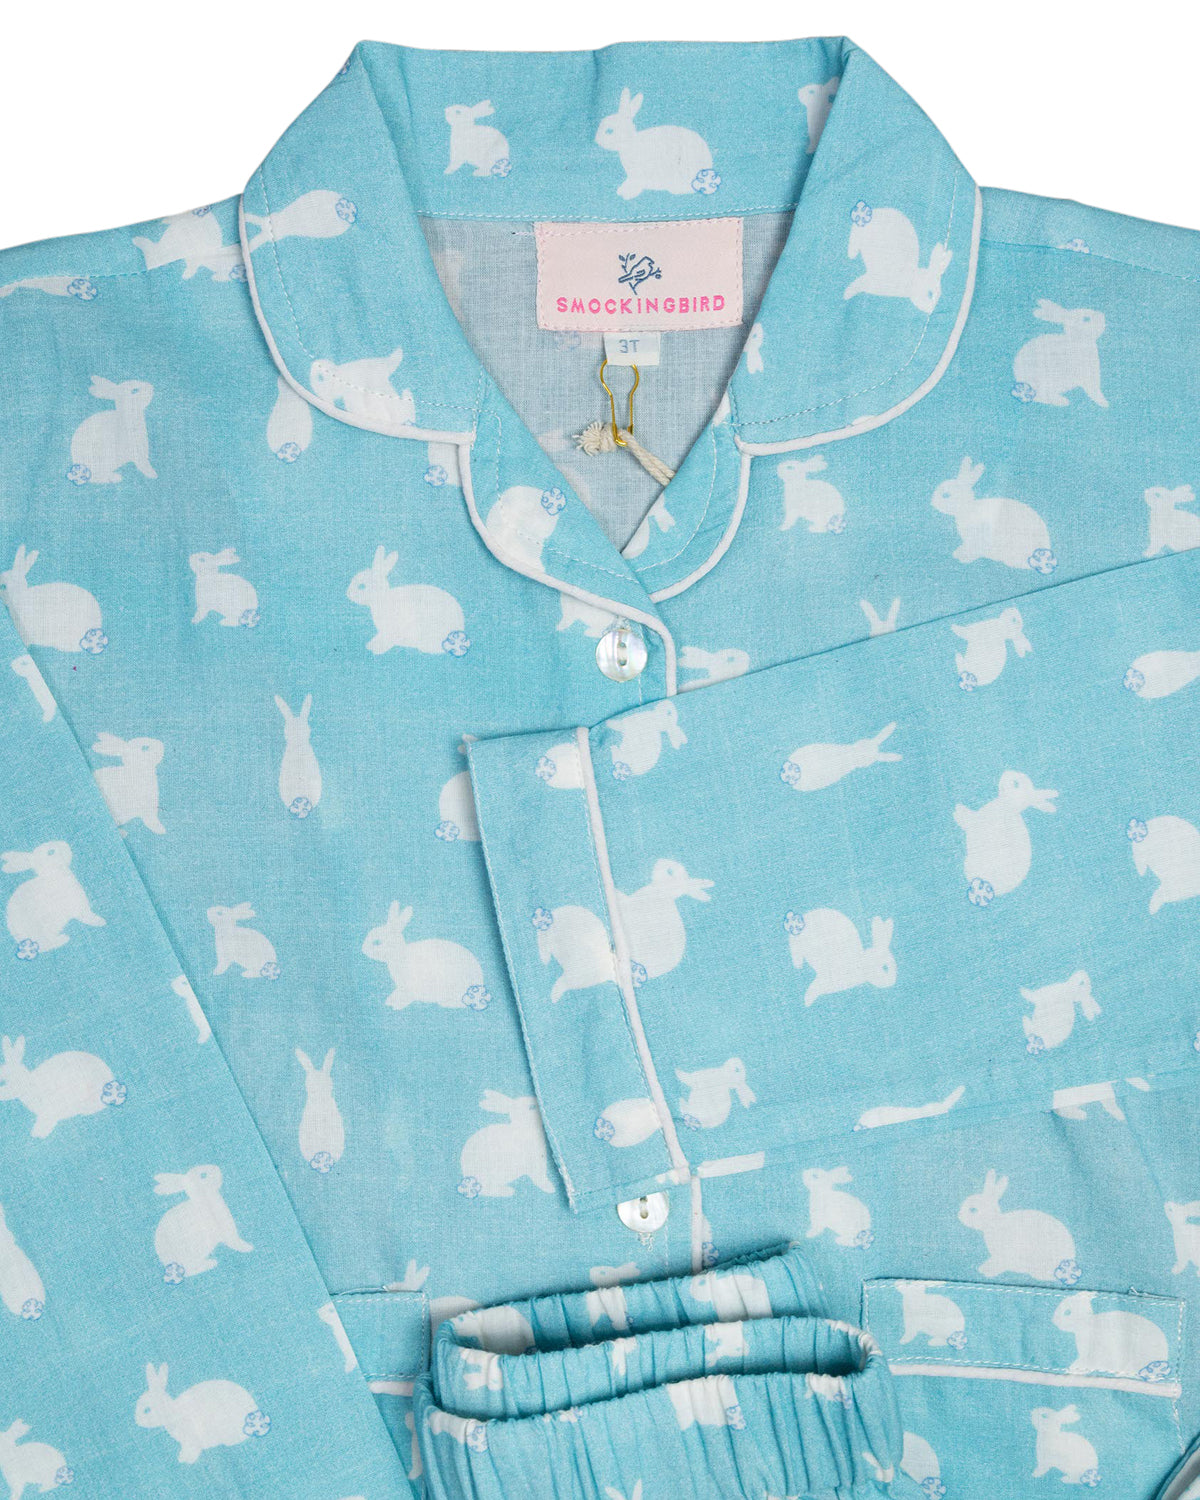 Hoppy Bunny Blue Pajama Set-FINAL SALE